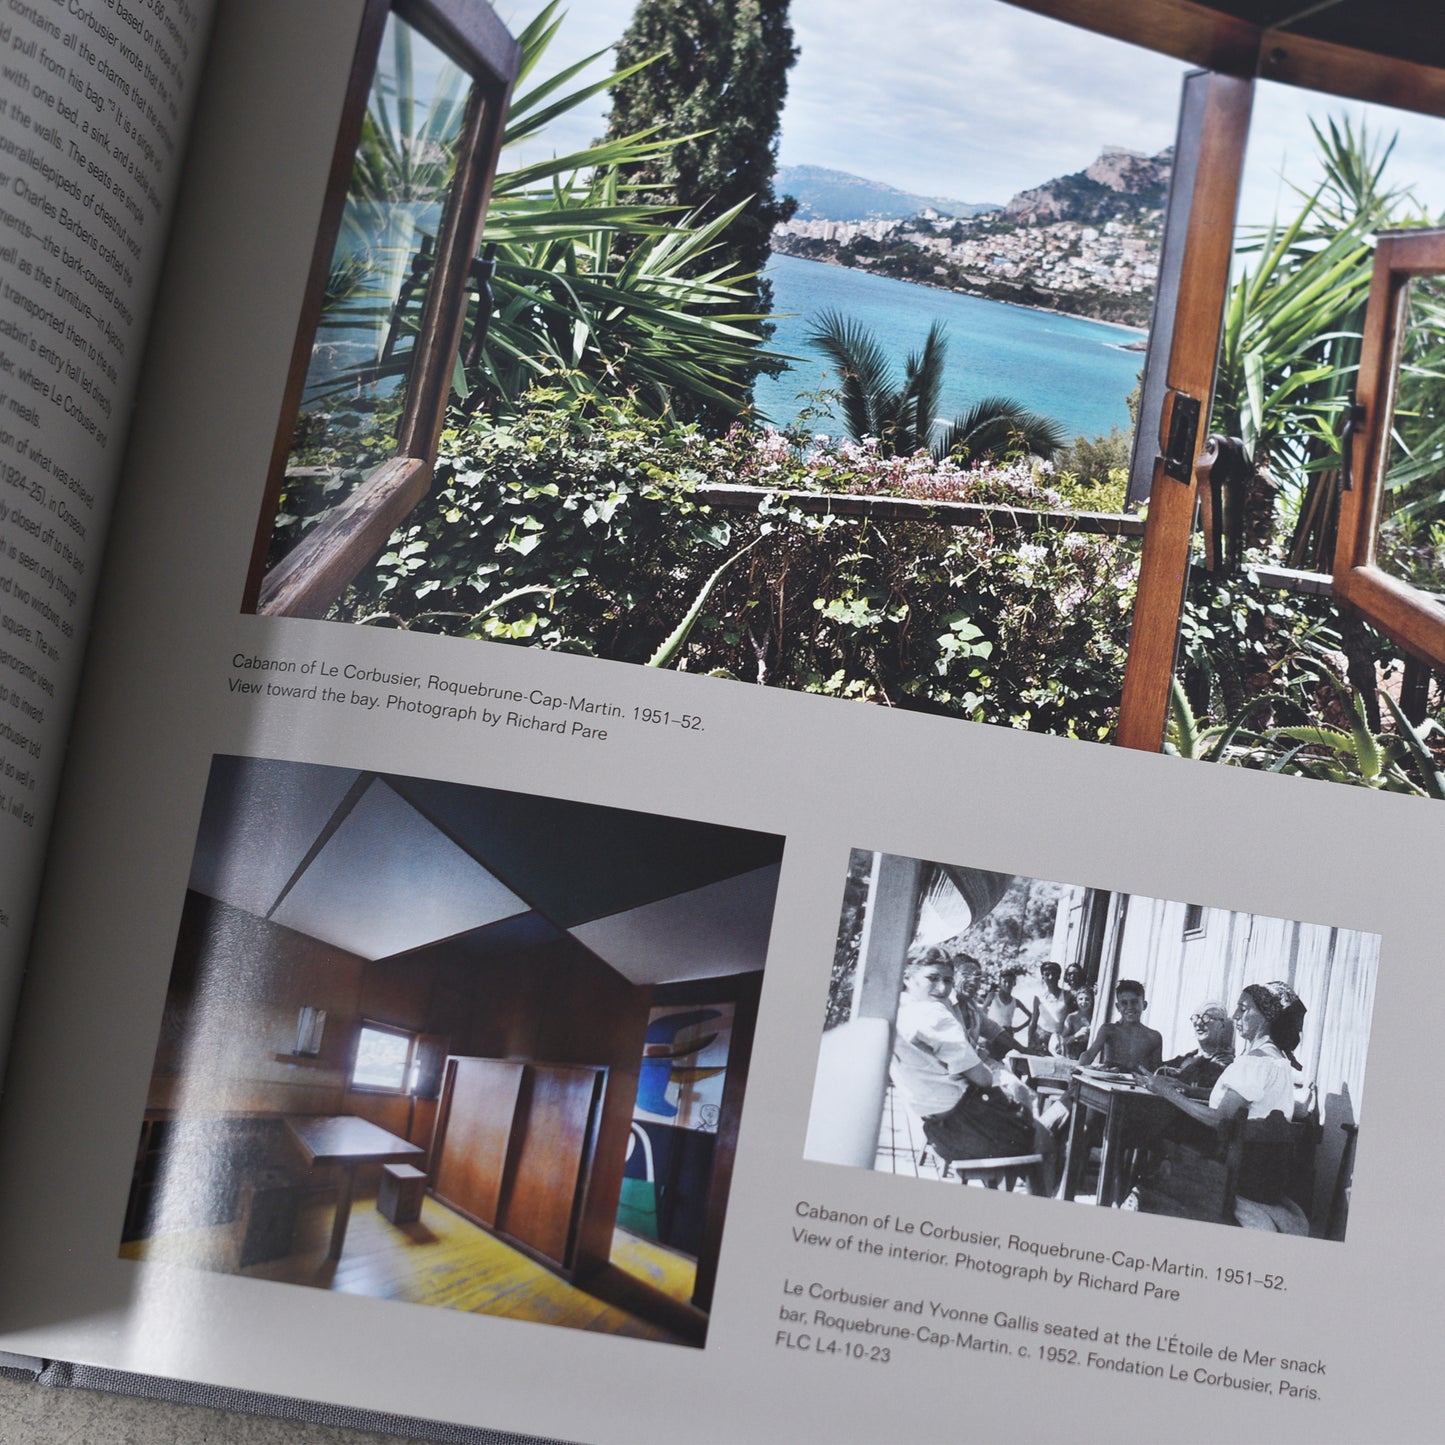 Le Corbusier: Atlas of Modern Landscapes